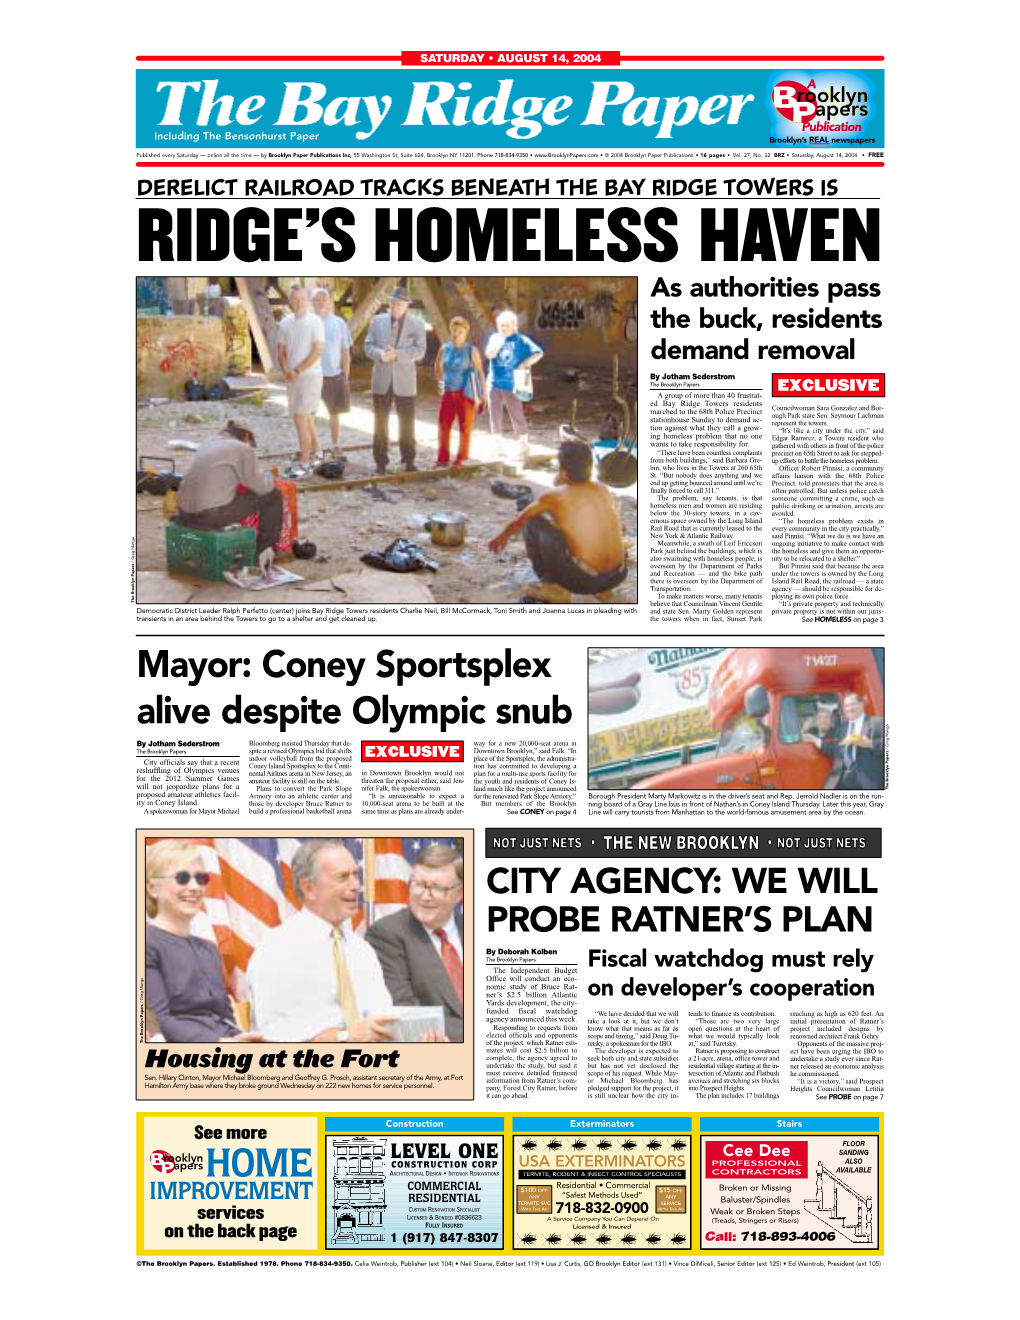 Ridge's Homeless Haven